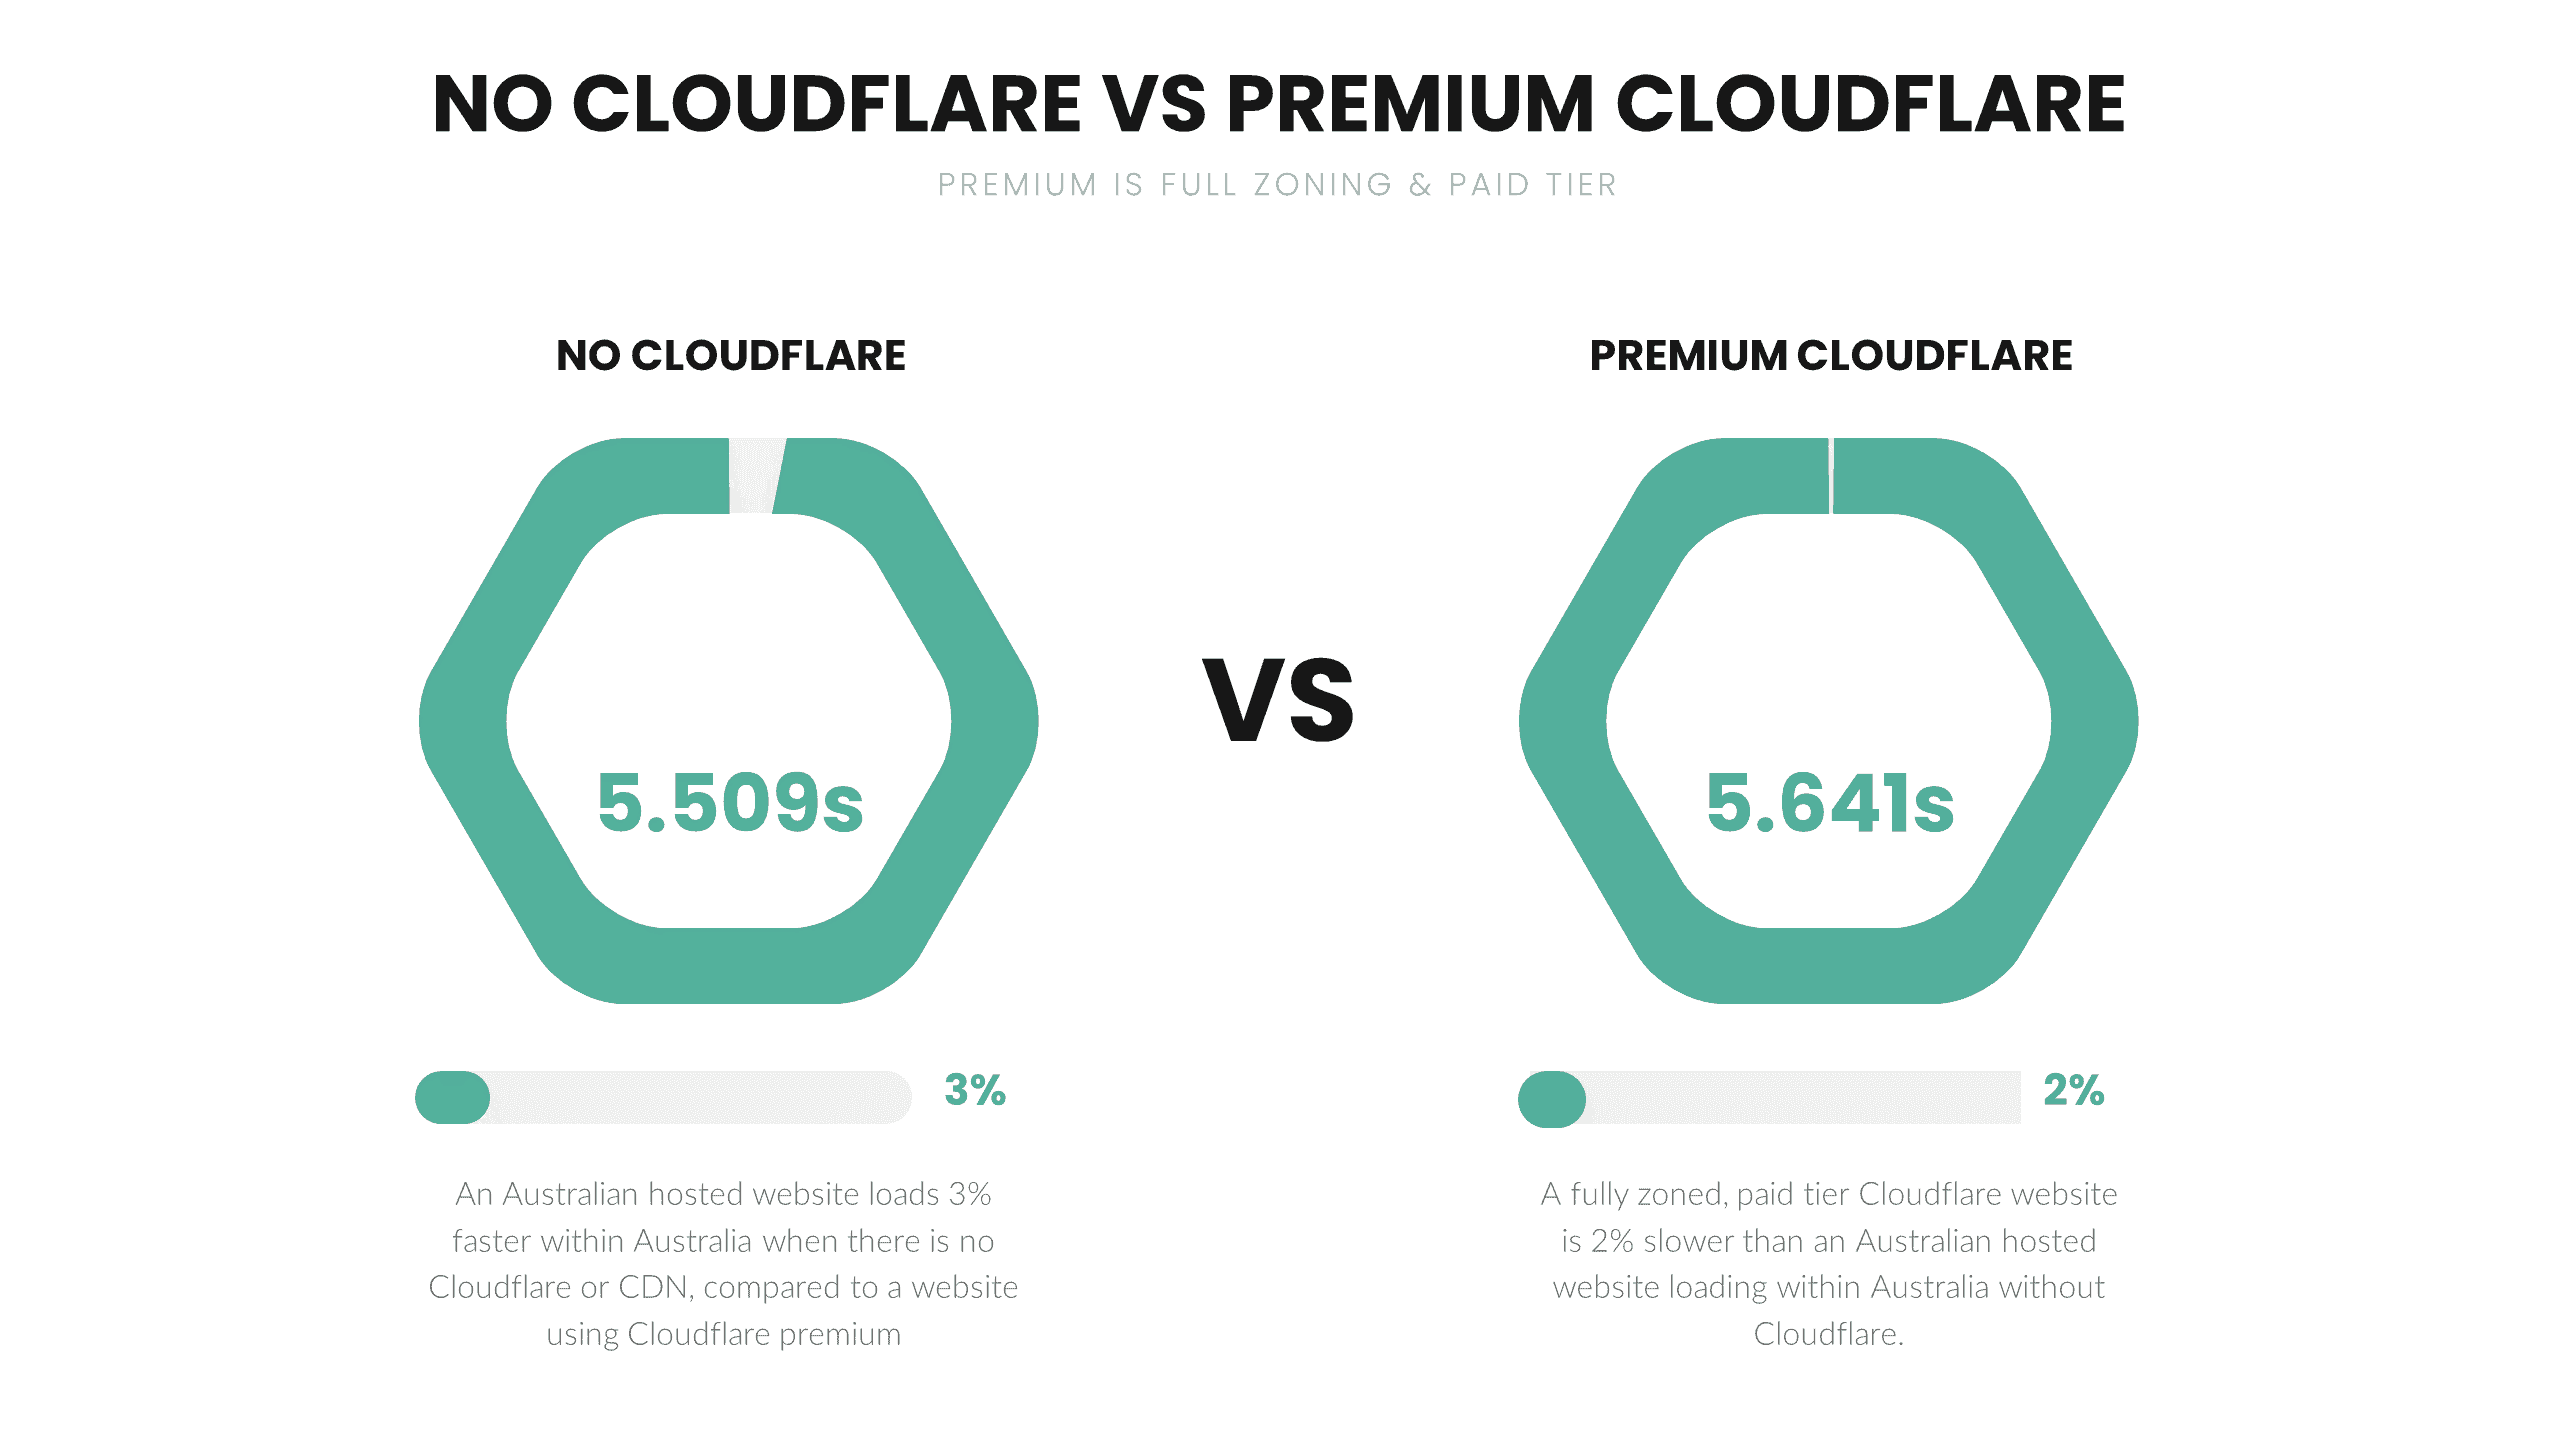 No Cloudflare vs Premium Cloudflare